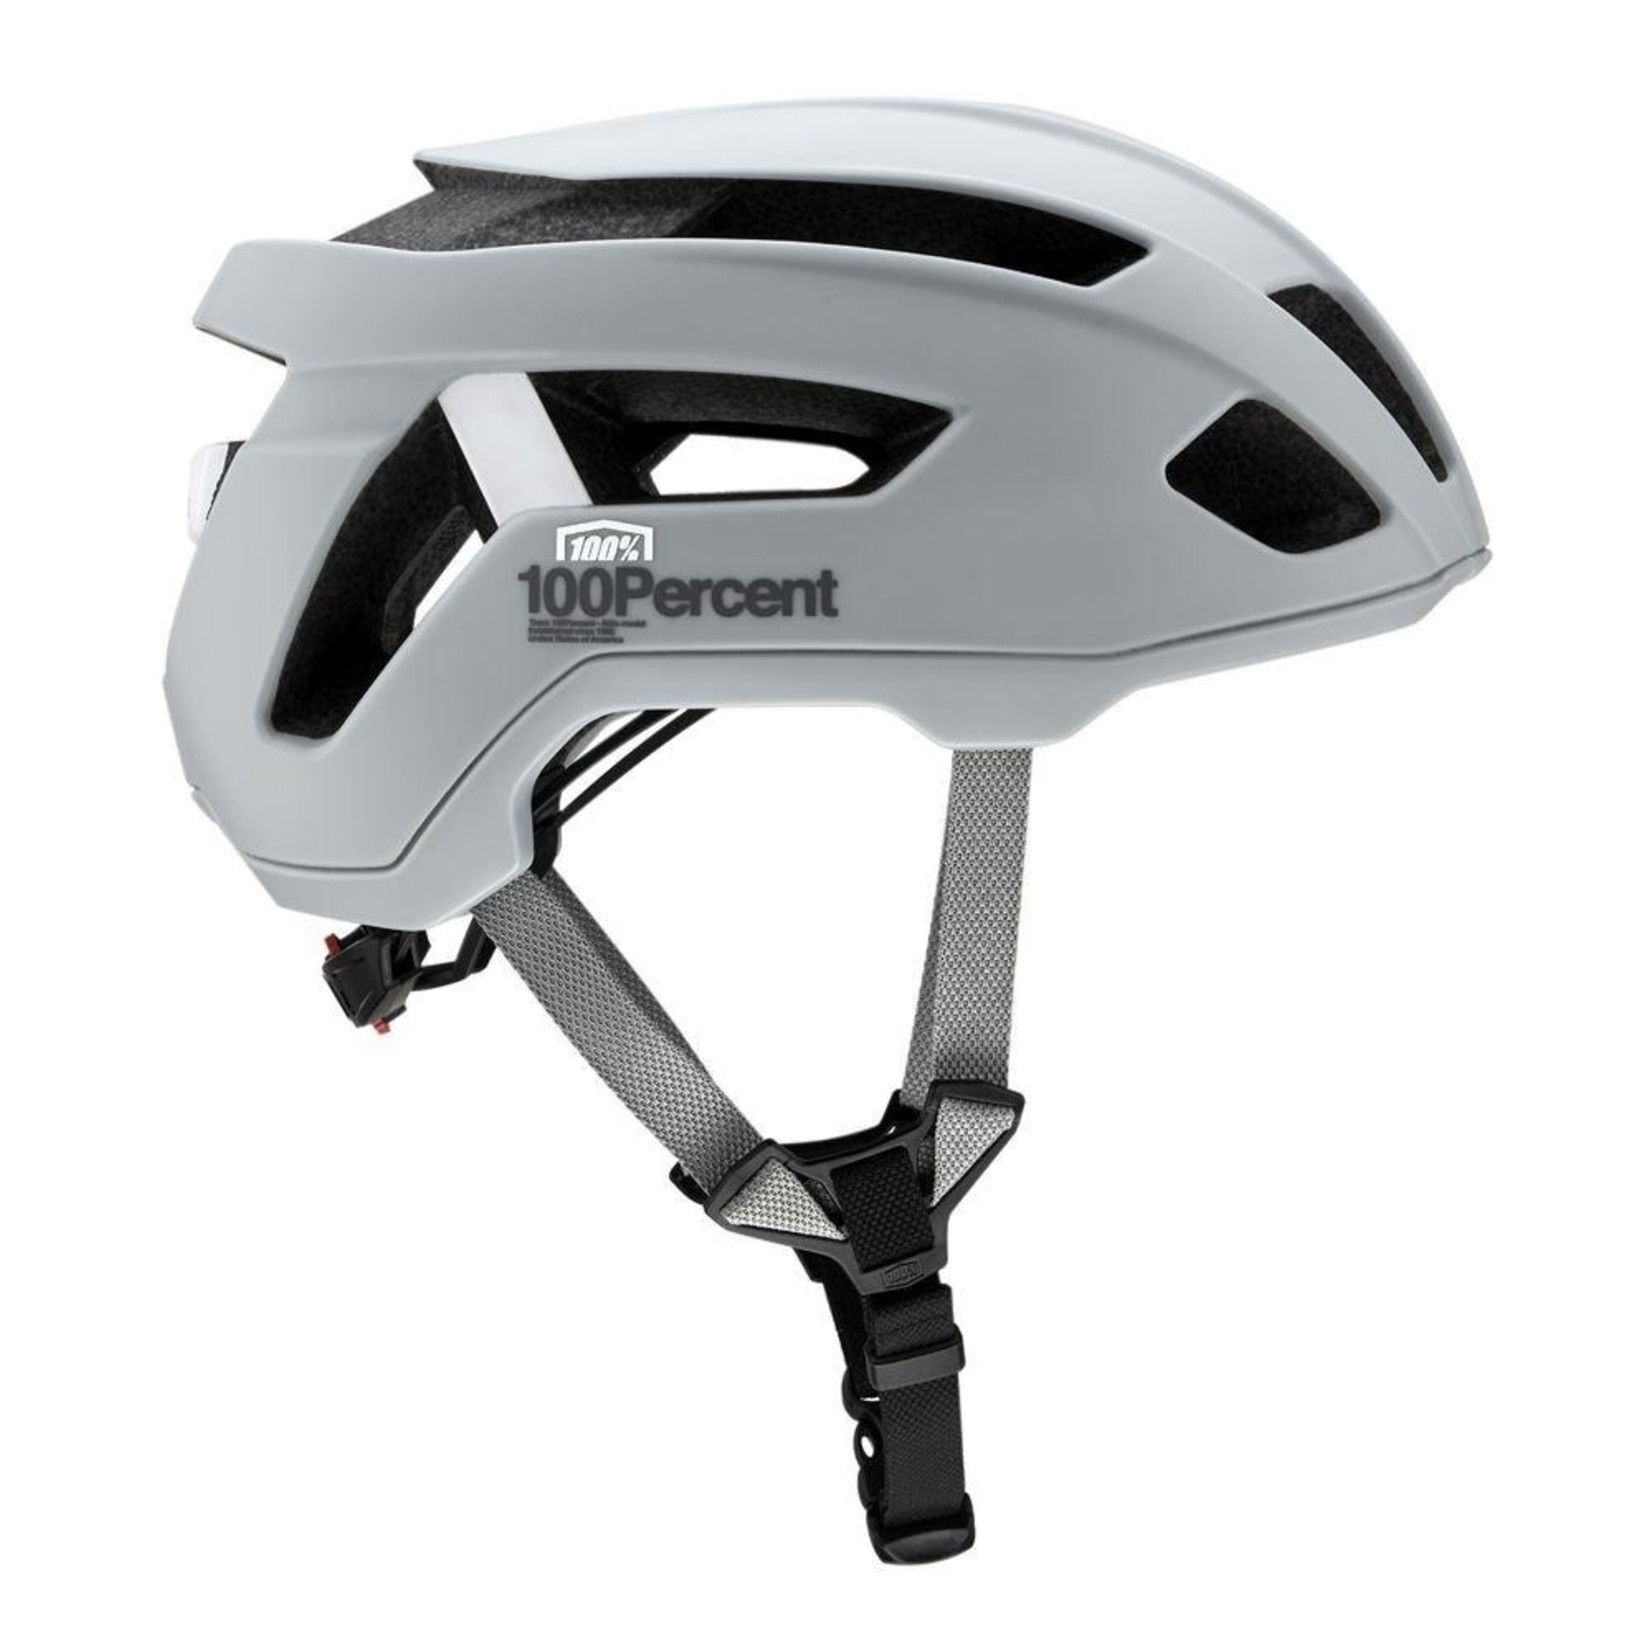 FE sports 100% ALTIS Gravel Rider Bike Helmet - Grey